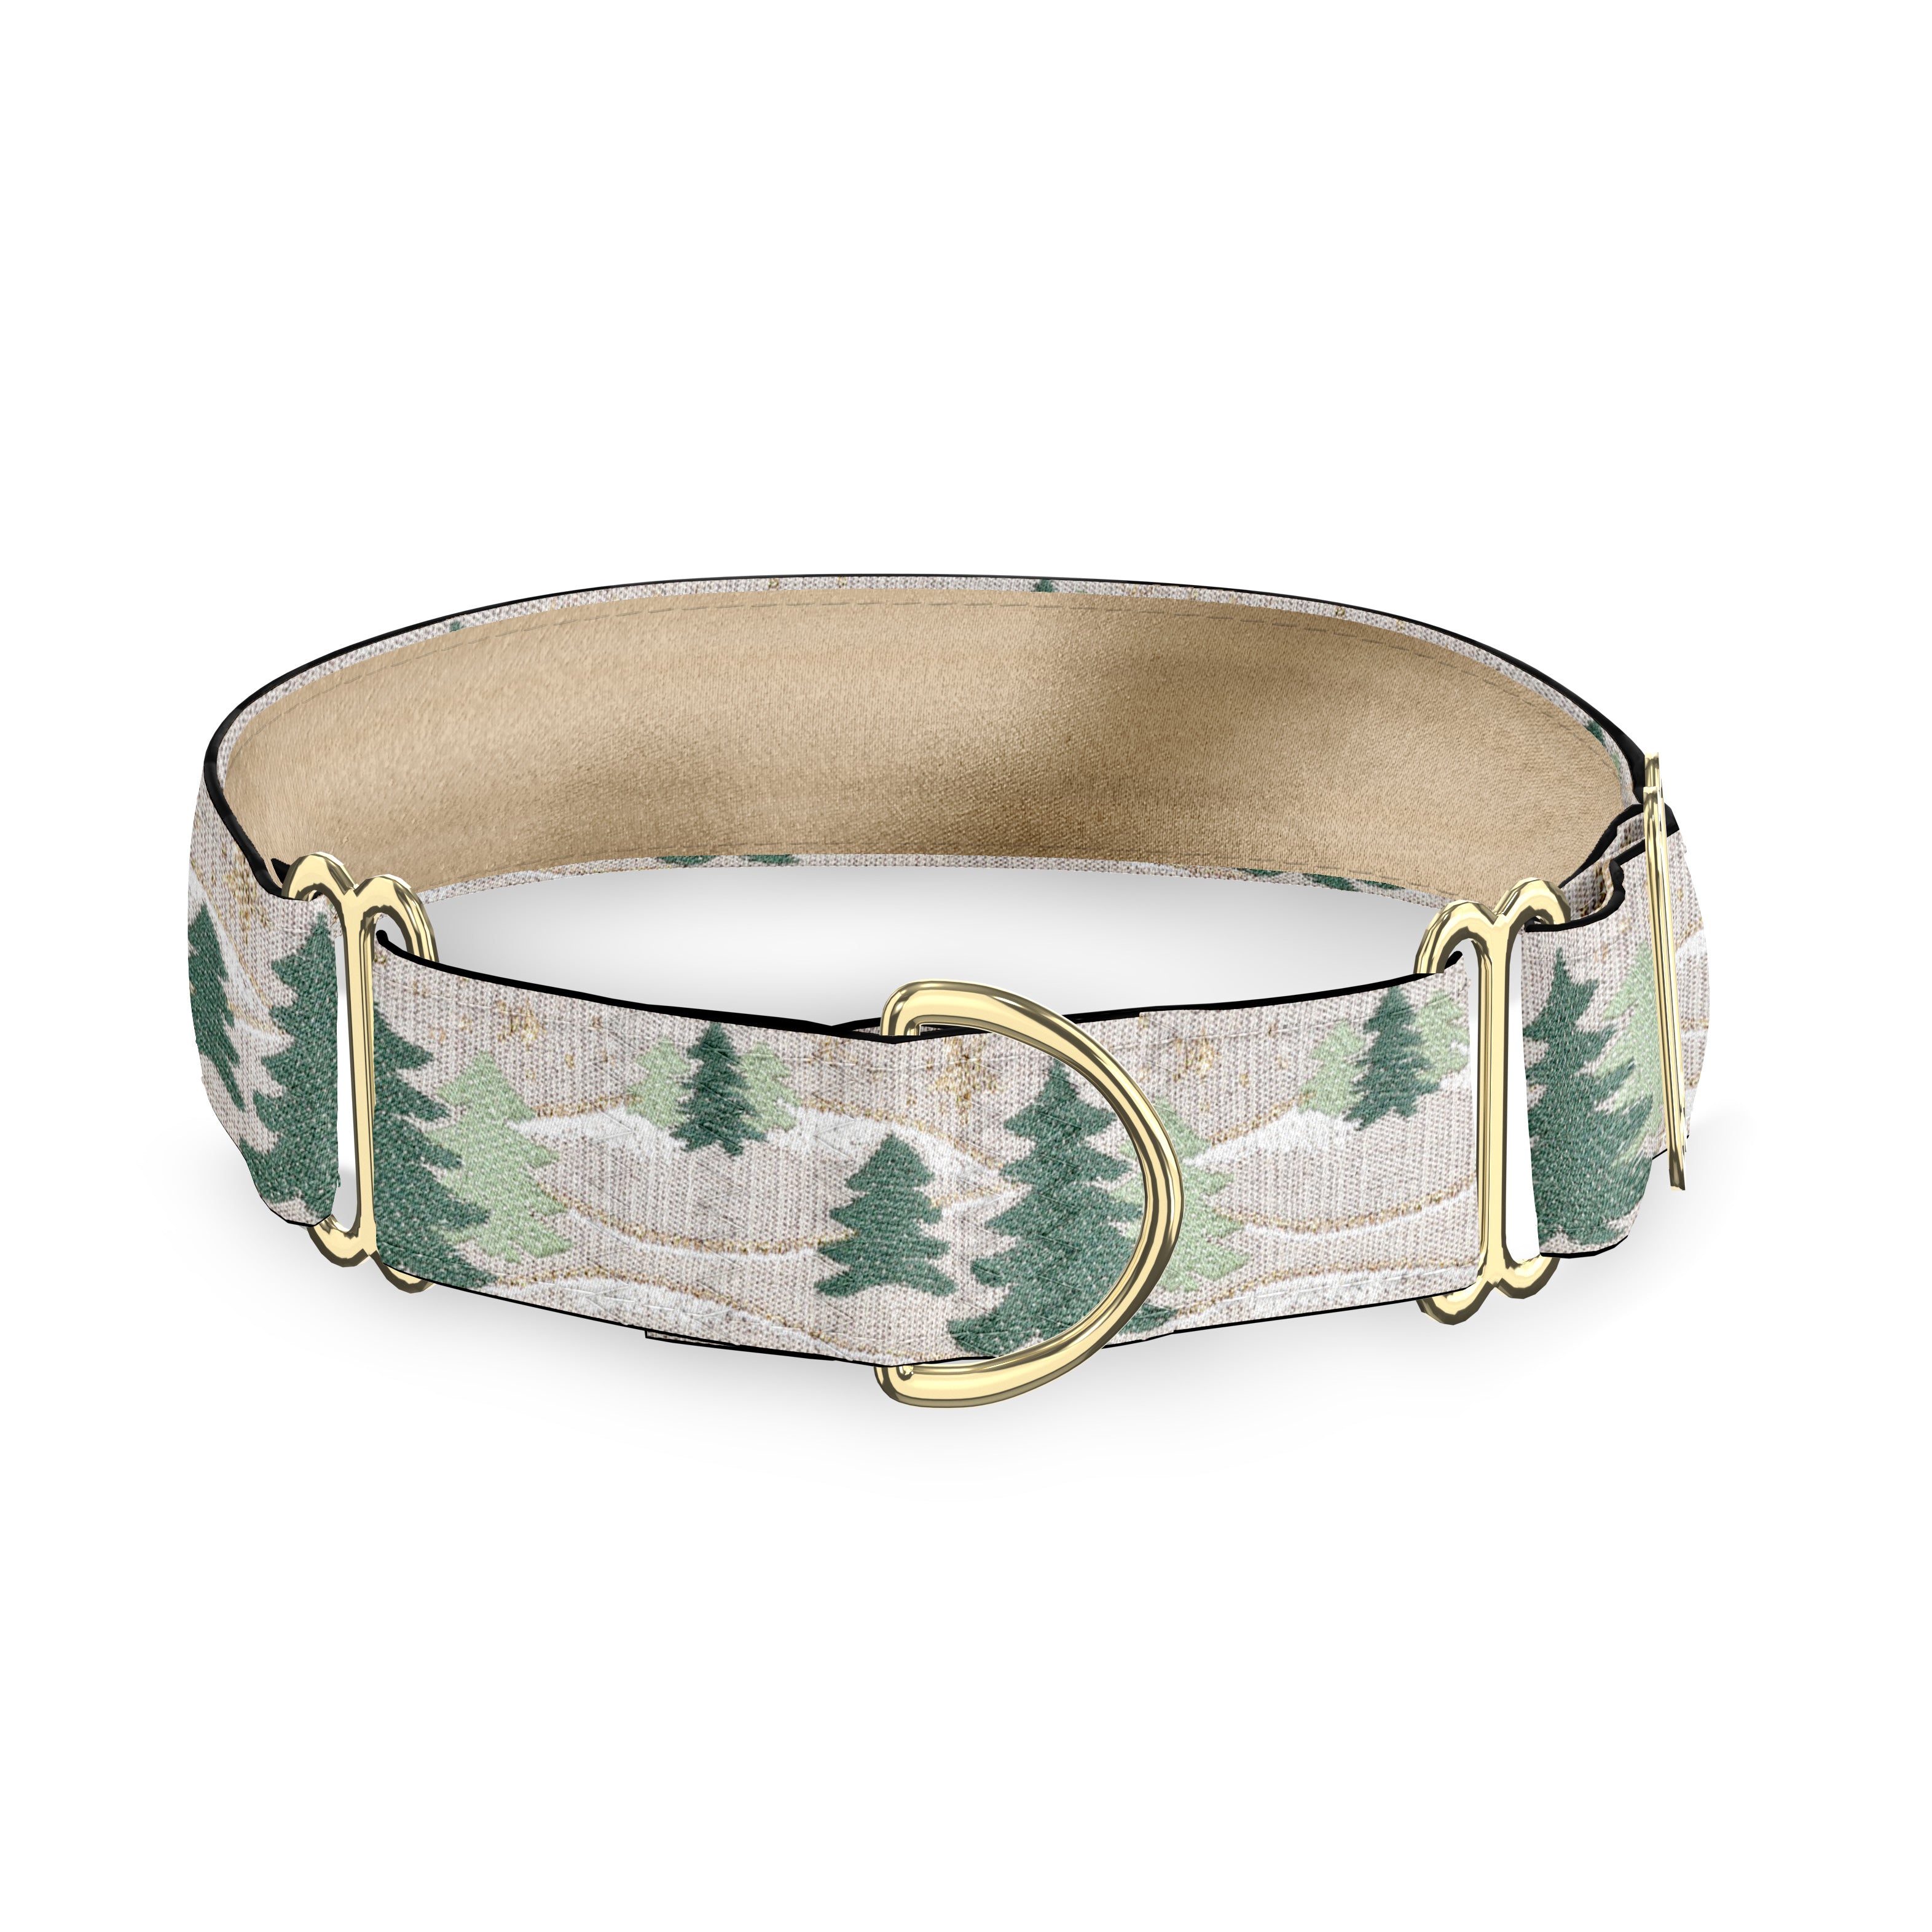 Pine Trees 2" Masterpiece Dog Collar